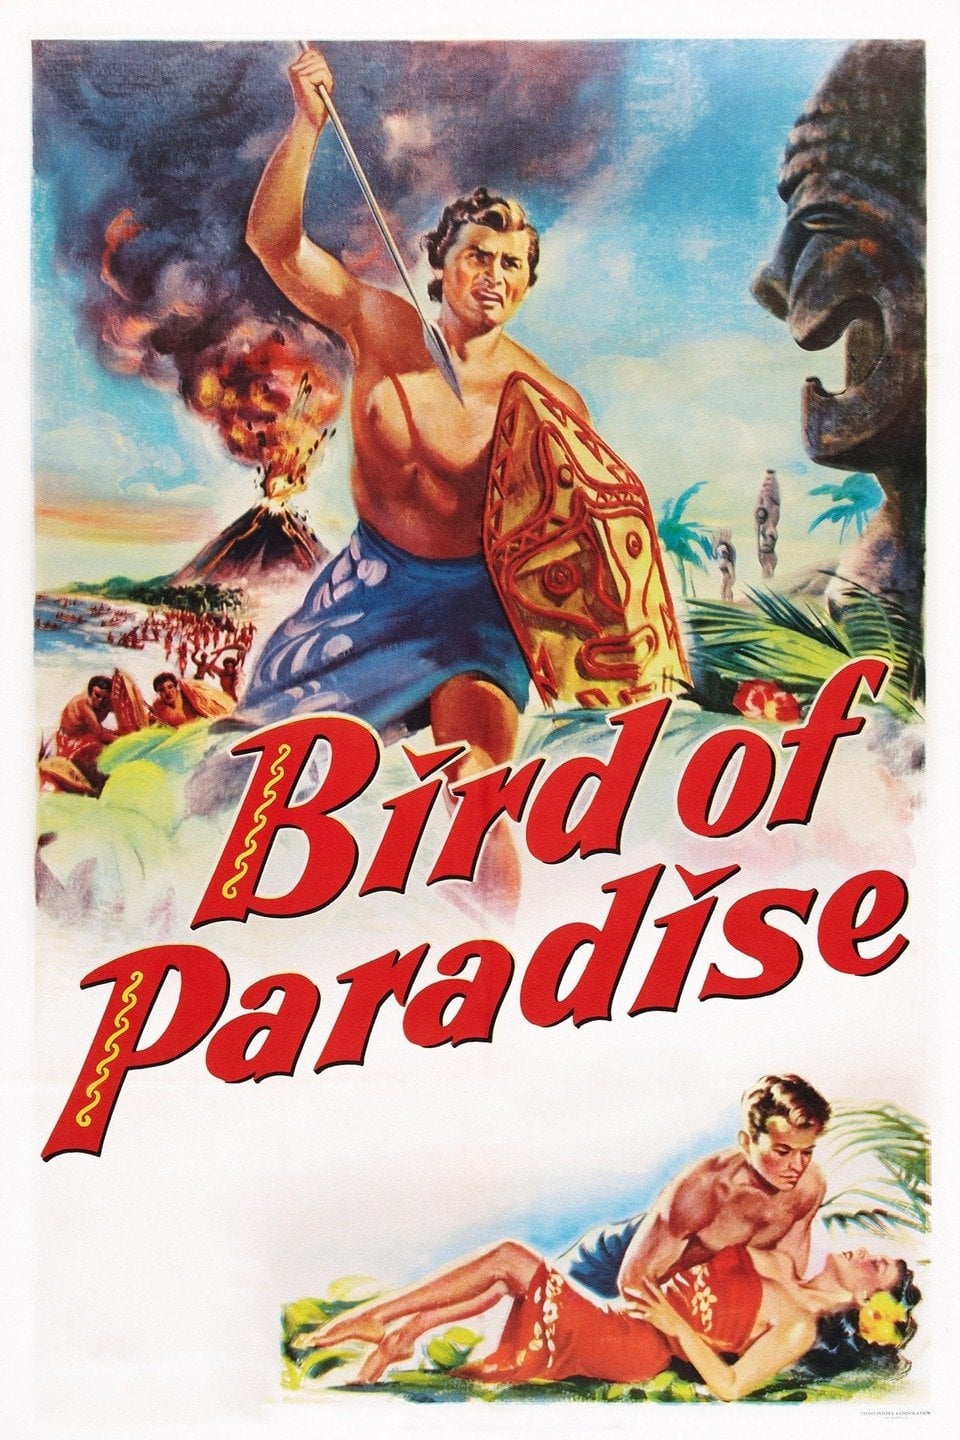 Bird of Paradise (1951)